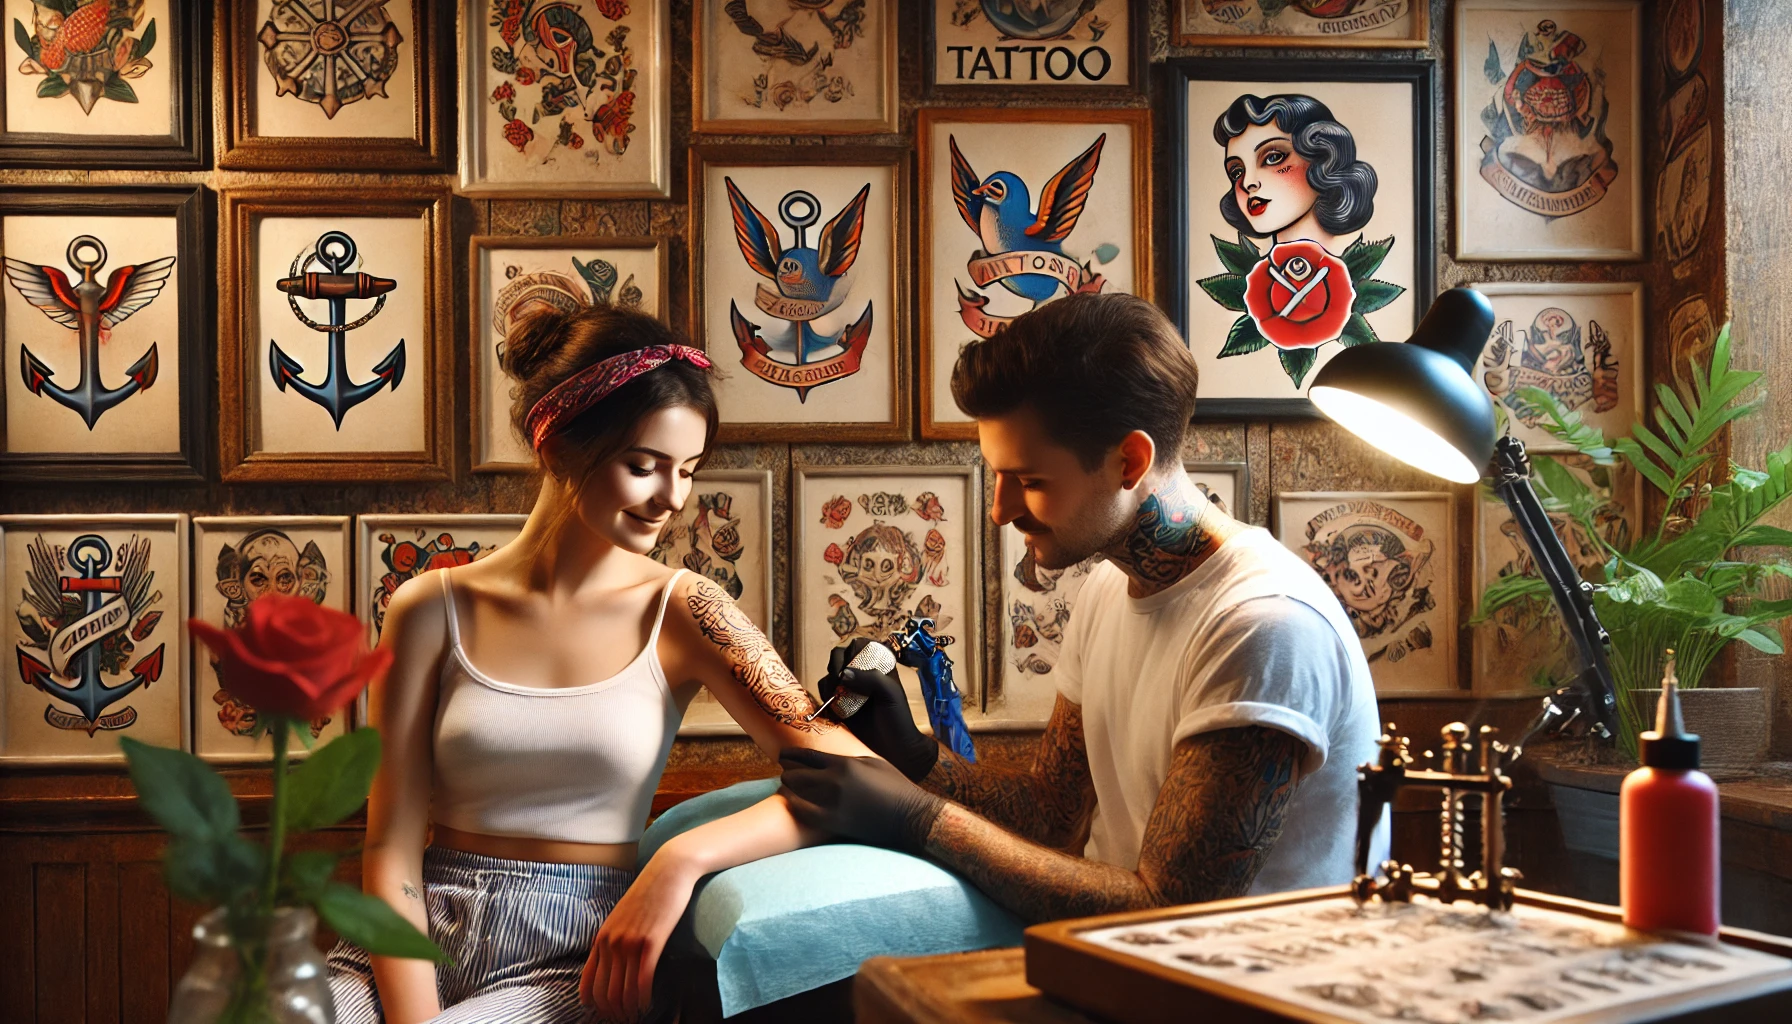 Traditional tattoo artists